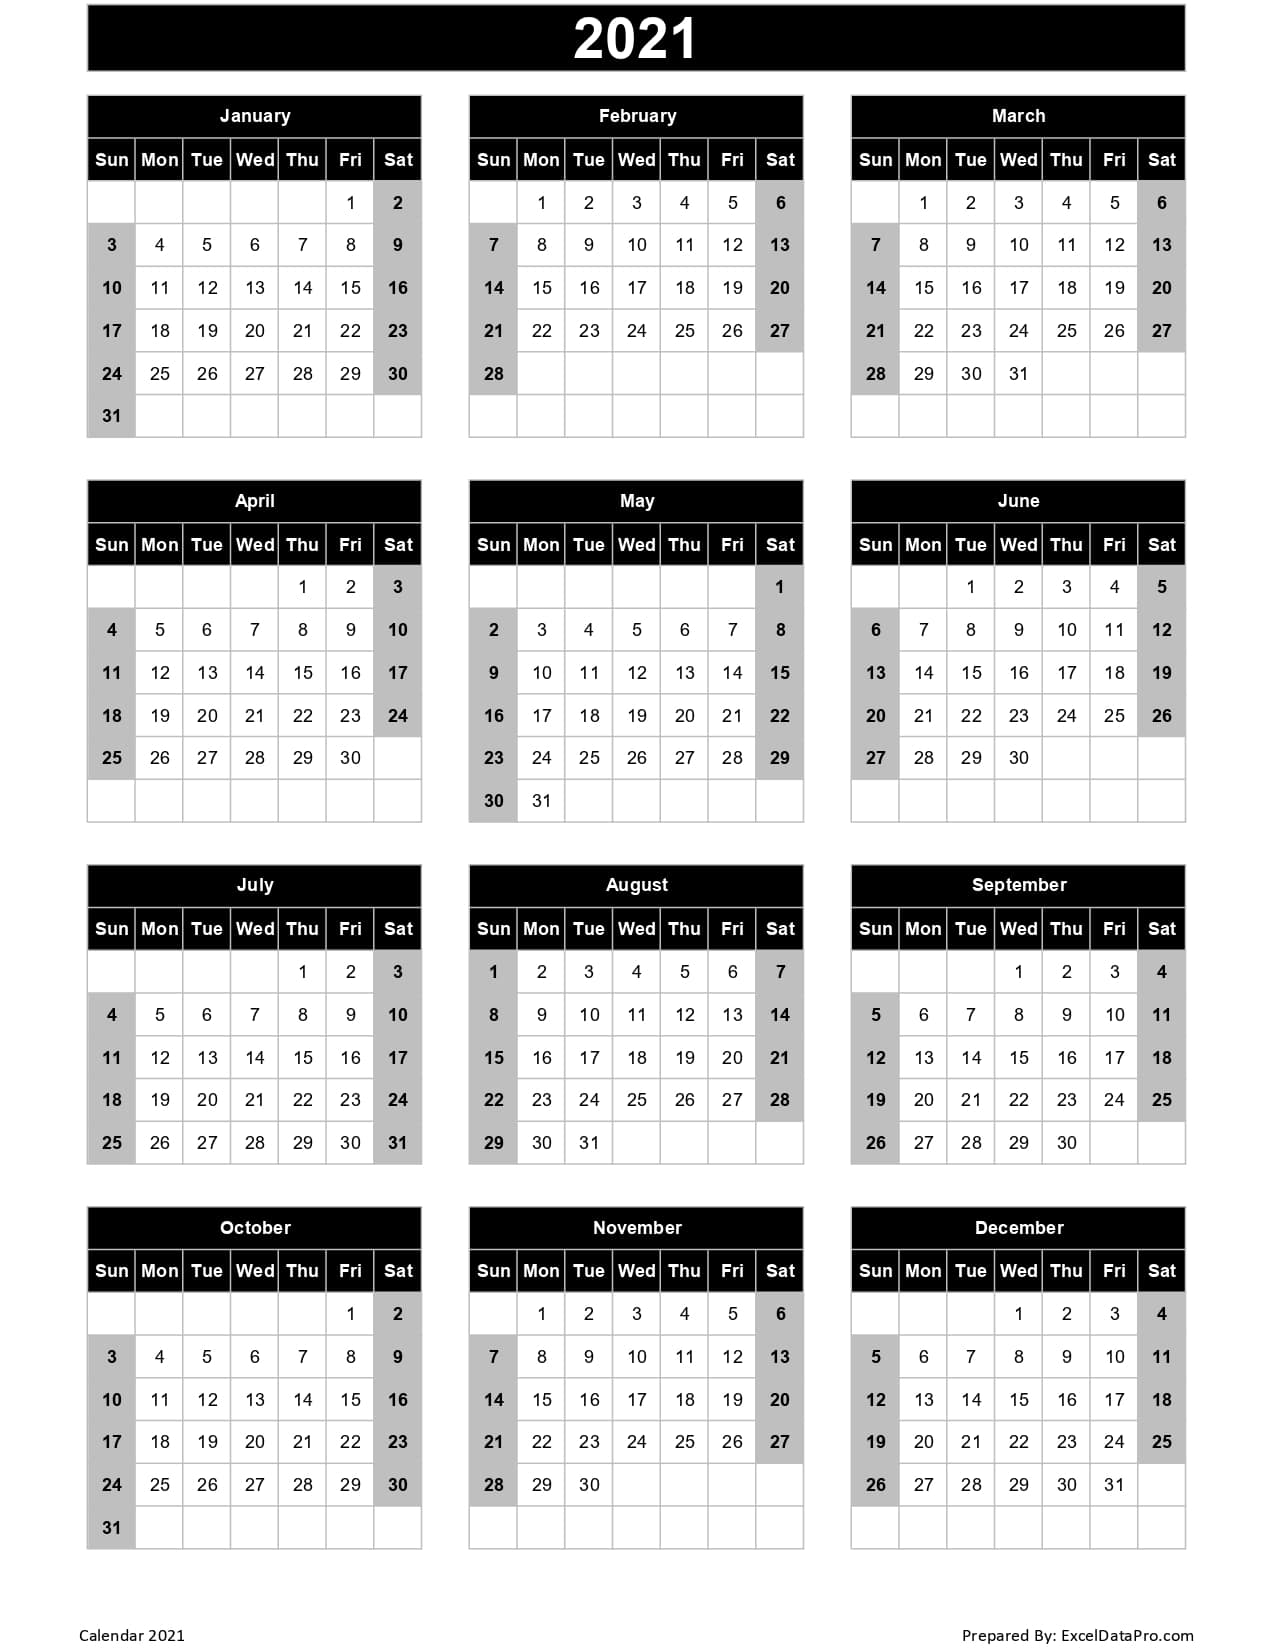 MCAT Calendar